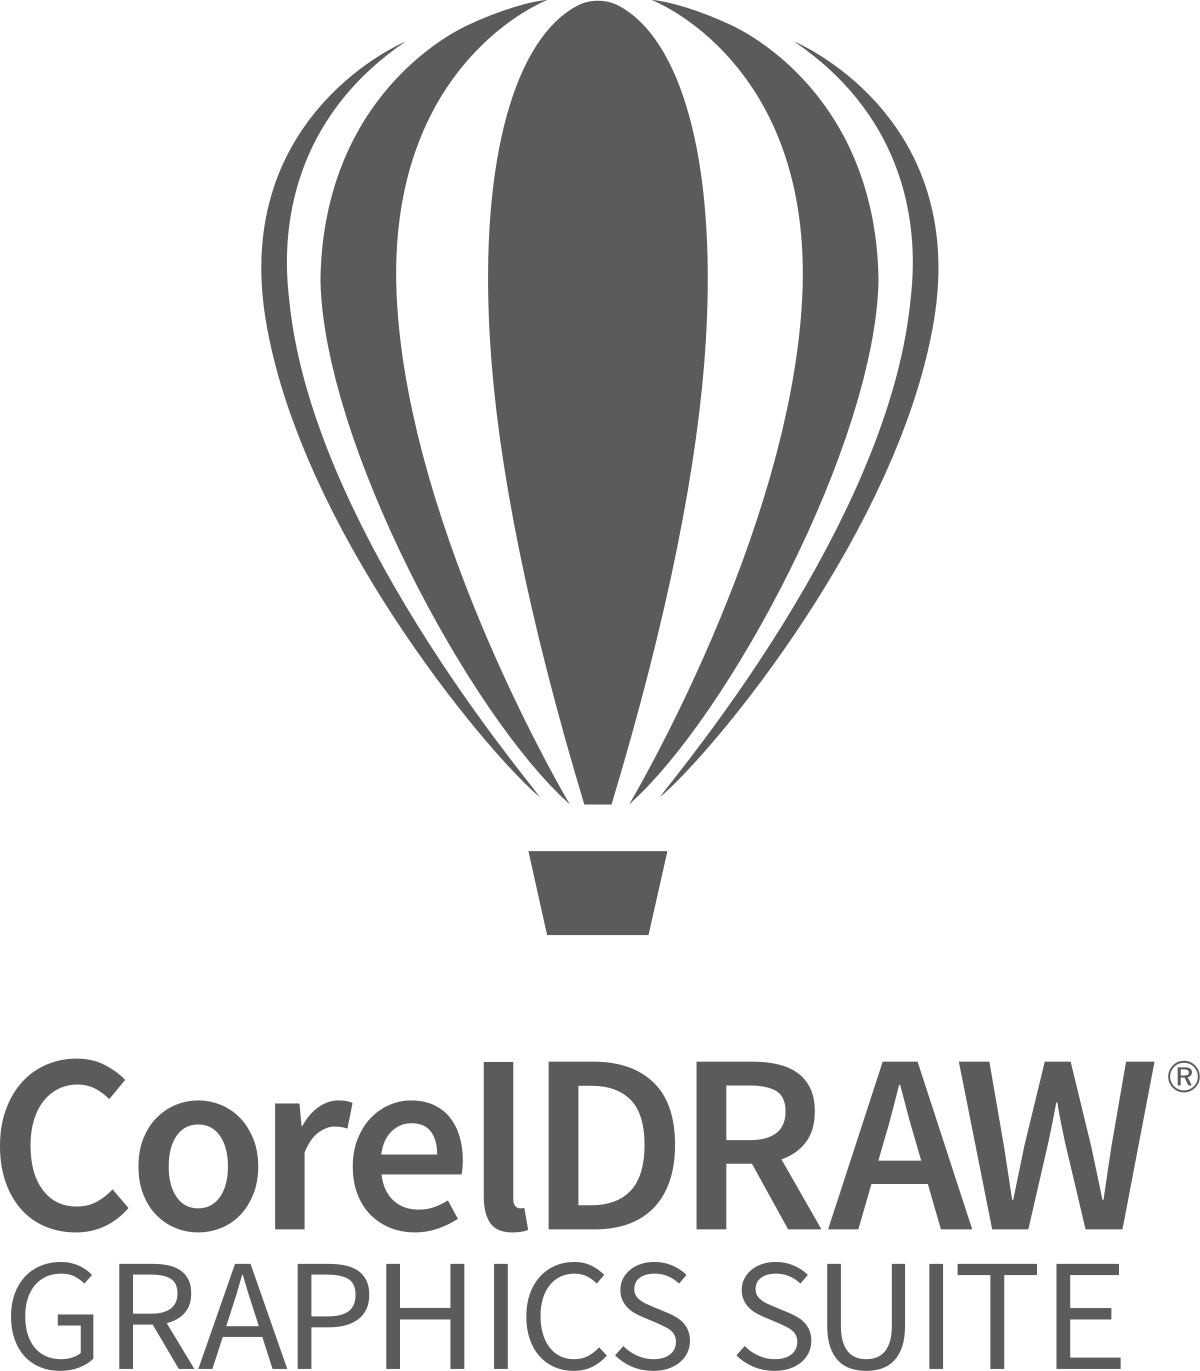 coreldraw graphics suite 12 free